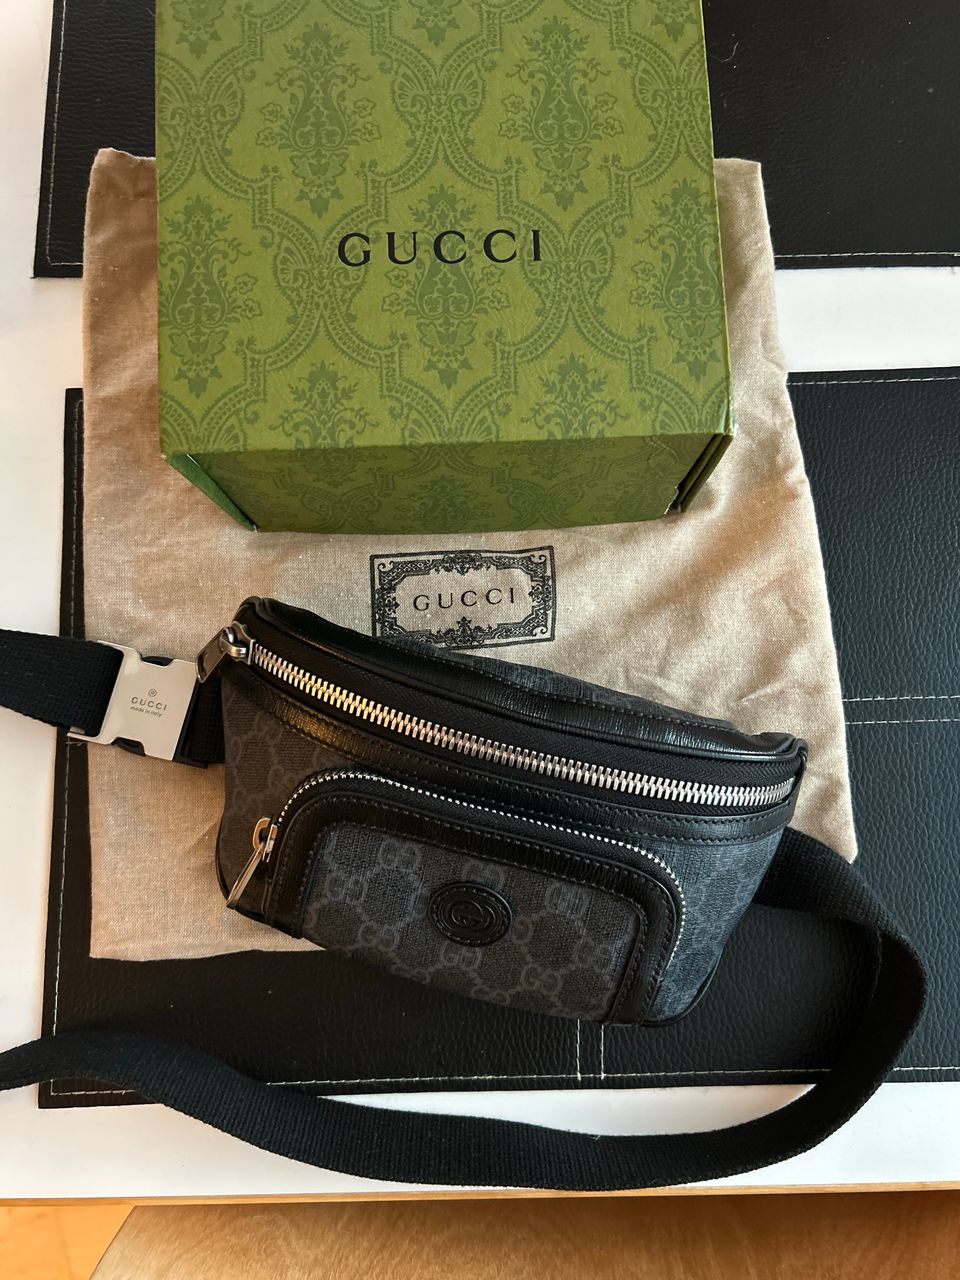 Gucci belt bag / cross body